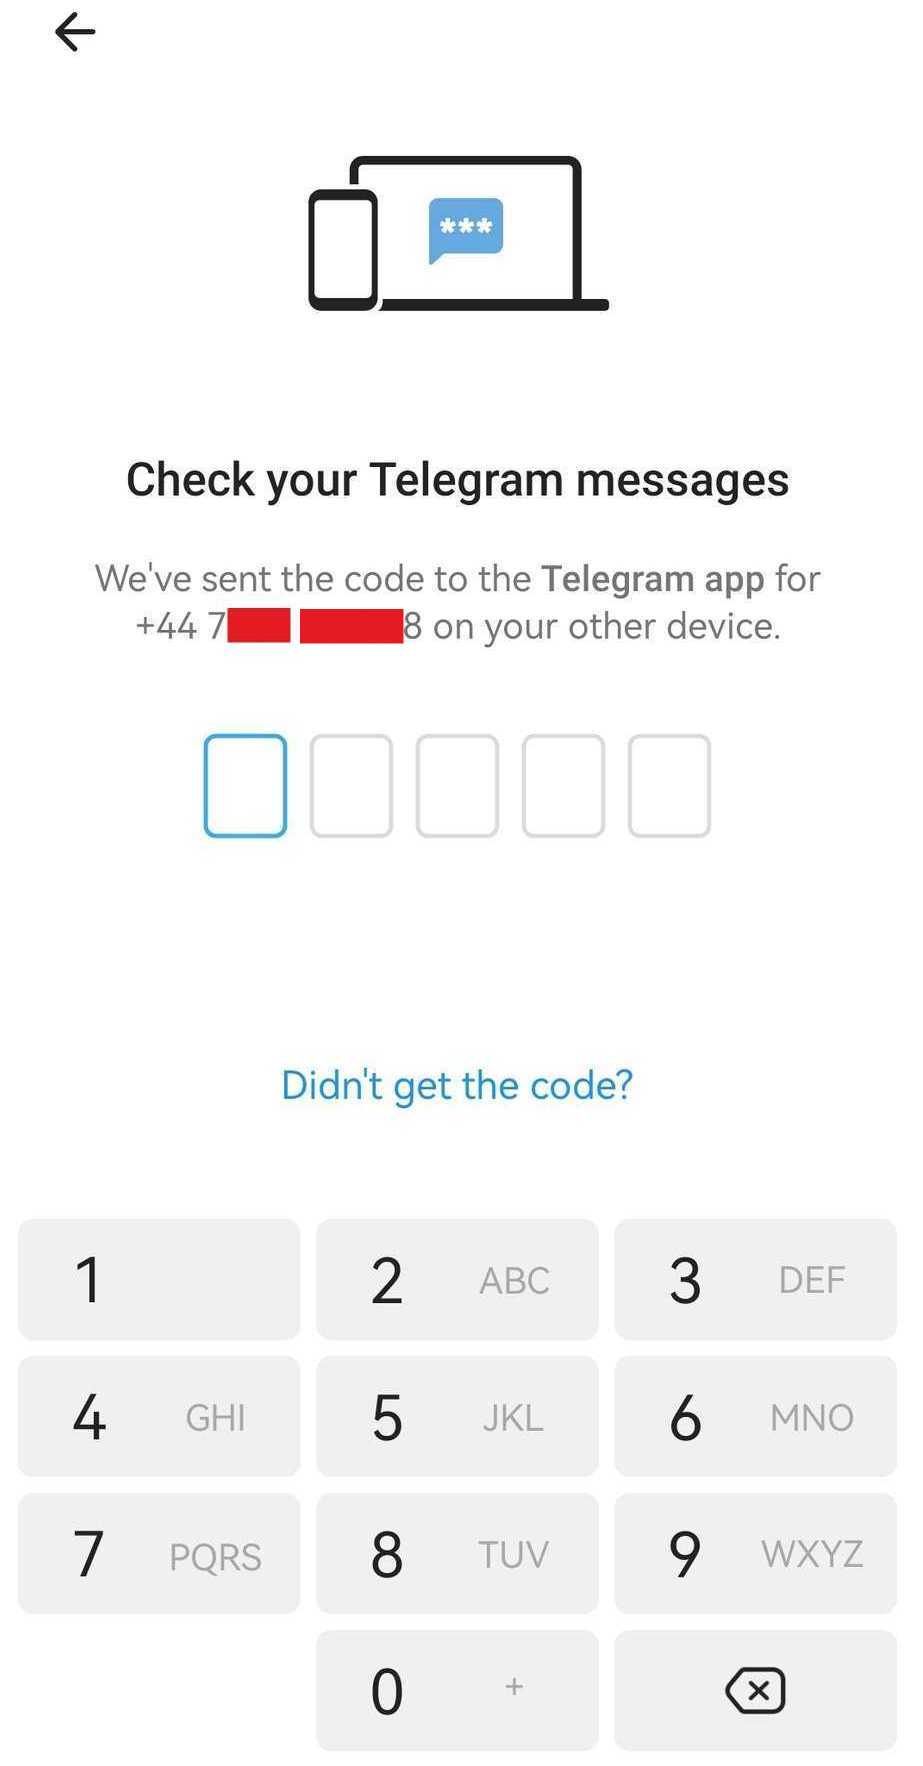 登录Telegram，却收到这样的提示"Check your Telegram messages